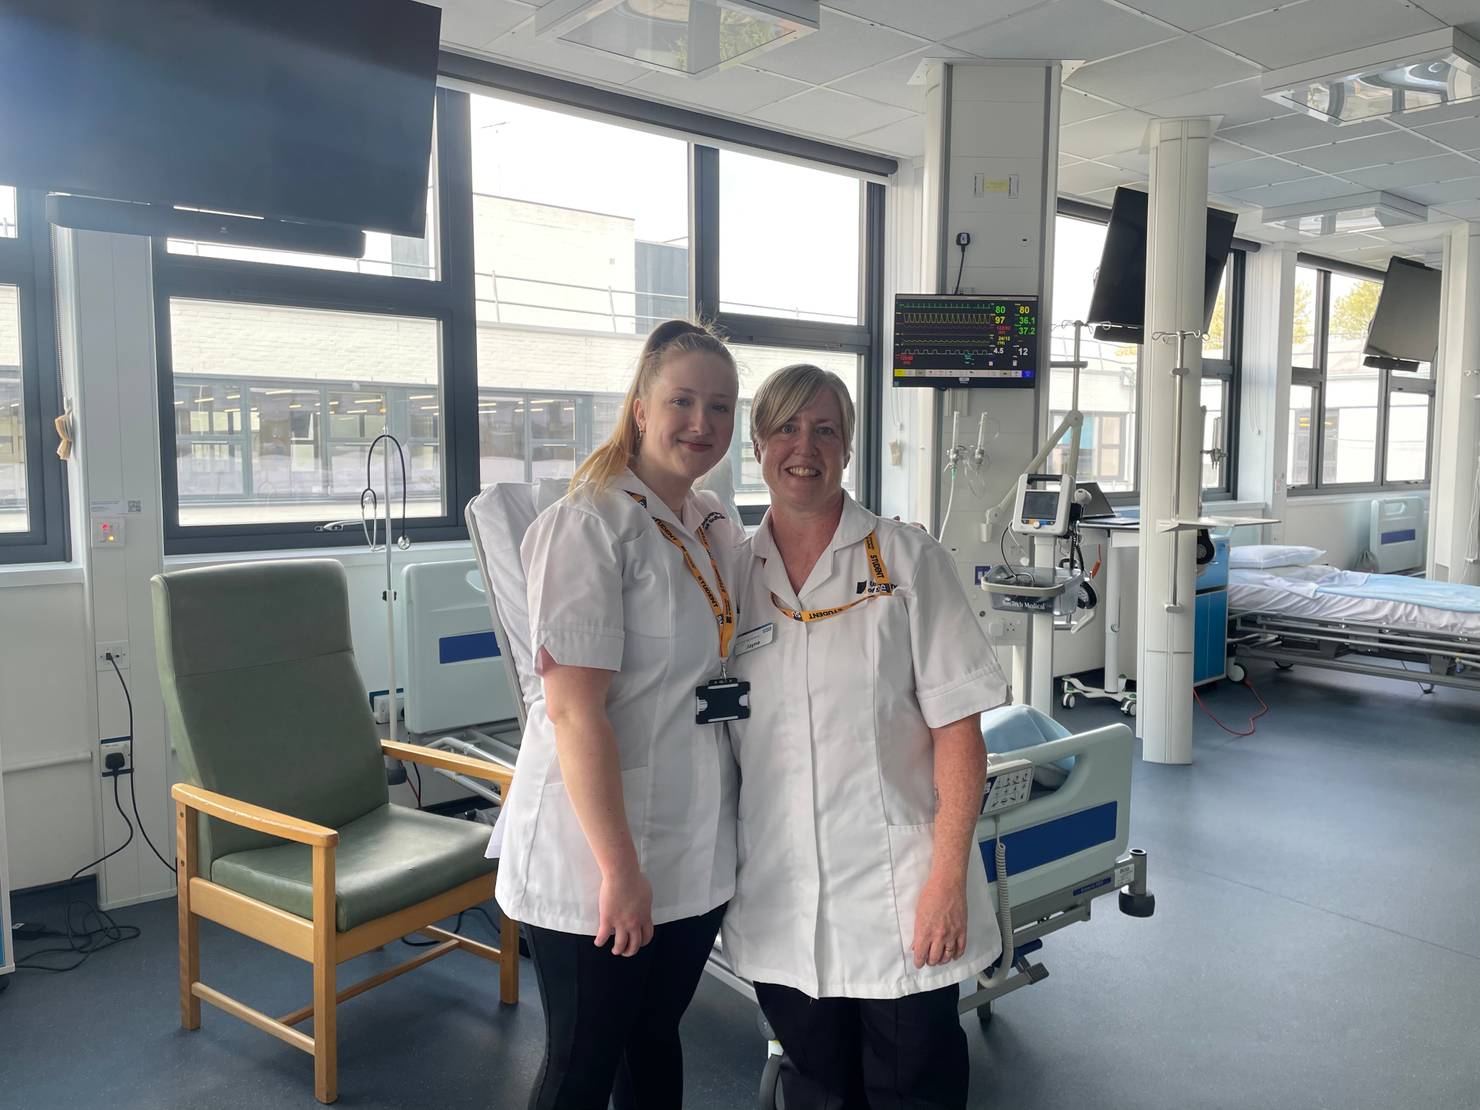 Nursing Associate apprentices Jodie (left) and Jayne (right) Goodall